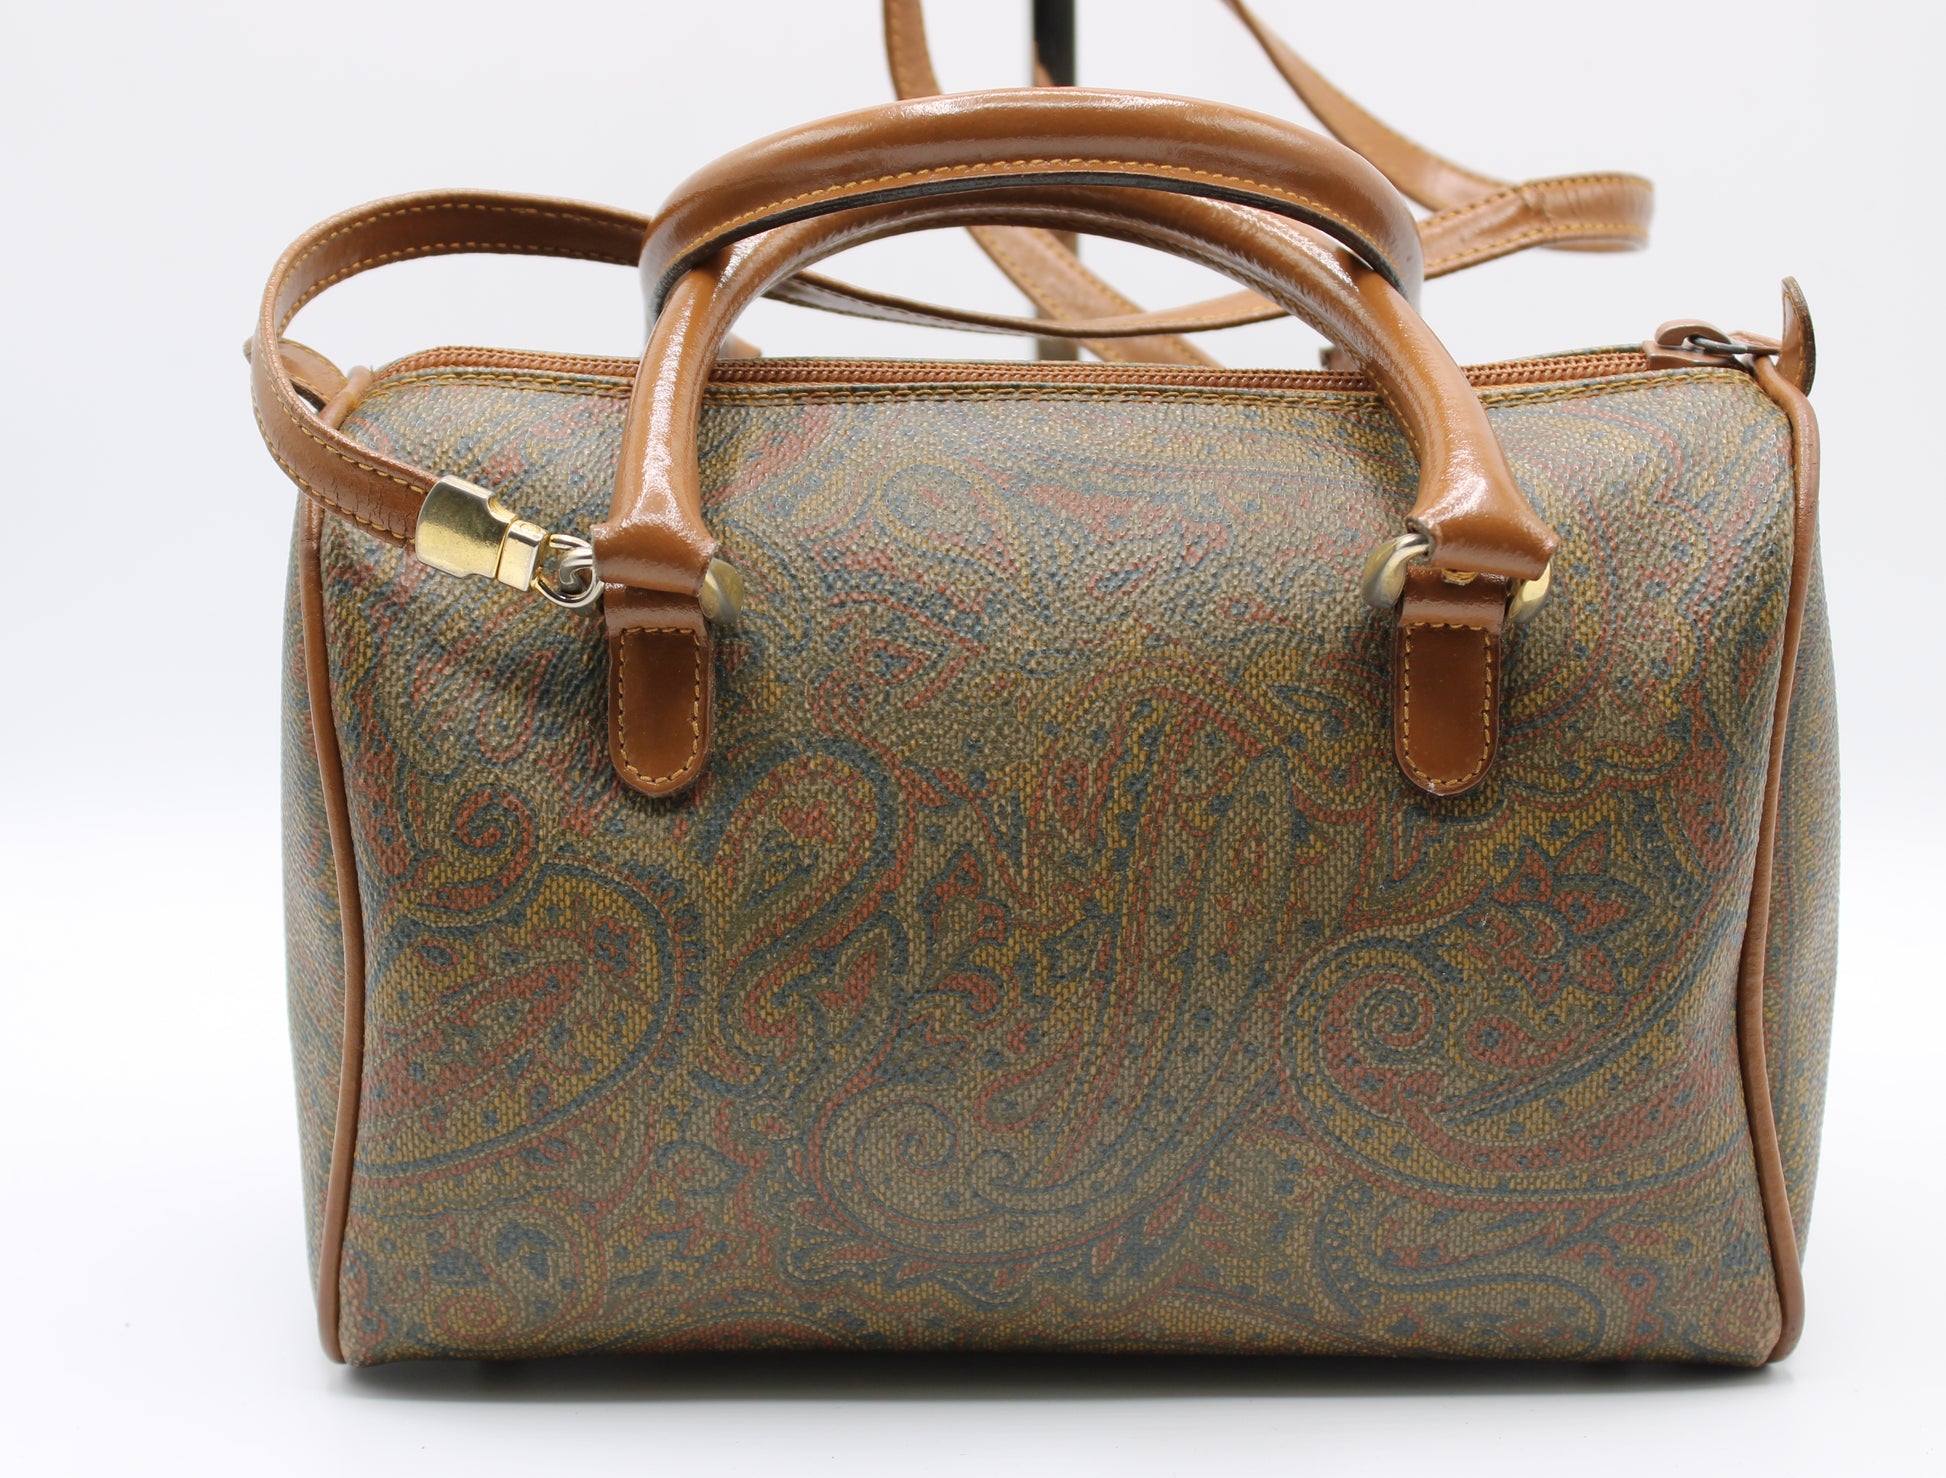 Valentino Garavani Small Boston Bag with Paisley Pattern and Tan Leather Trim back view